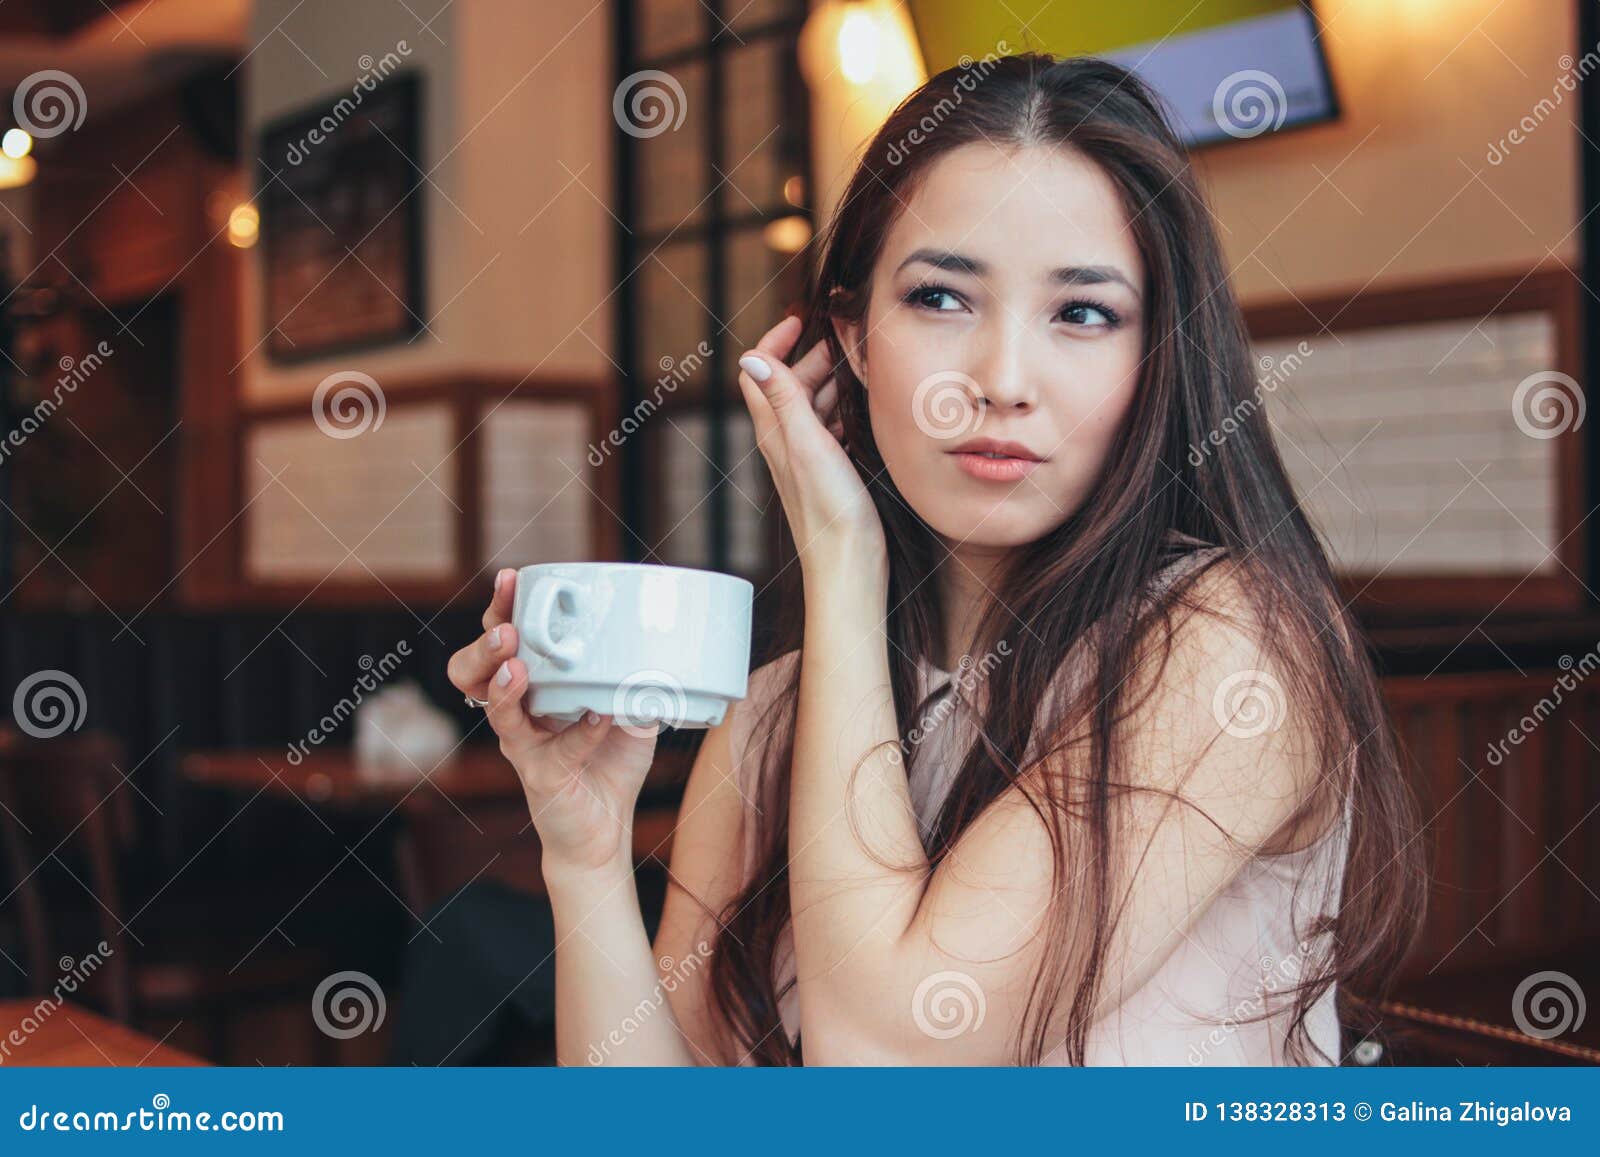 https://thumbs.dreamstime.com/z/beautiful-charming-romantic-brunette-smiling-asian-girl-has-breakfast-coffee-cafe-138328313.jpg